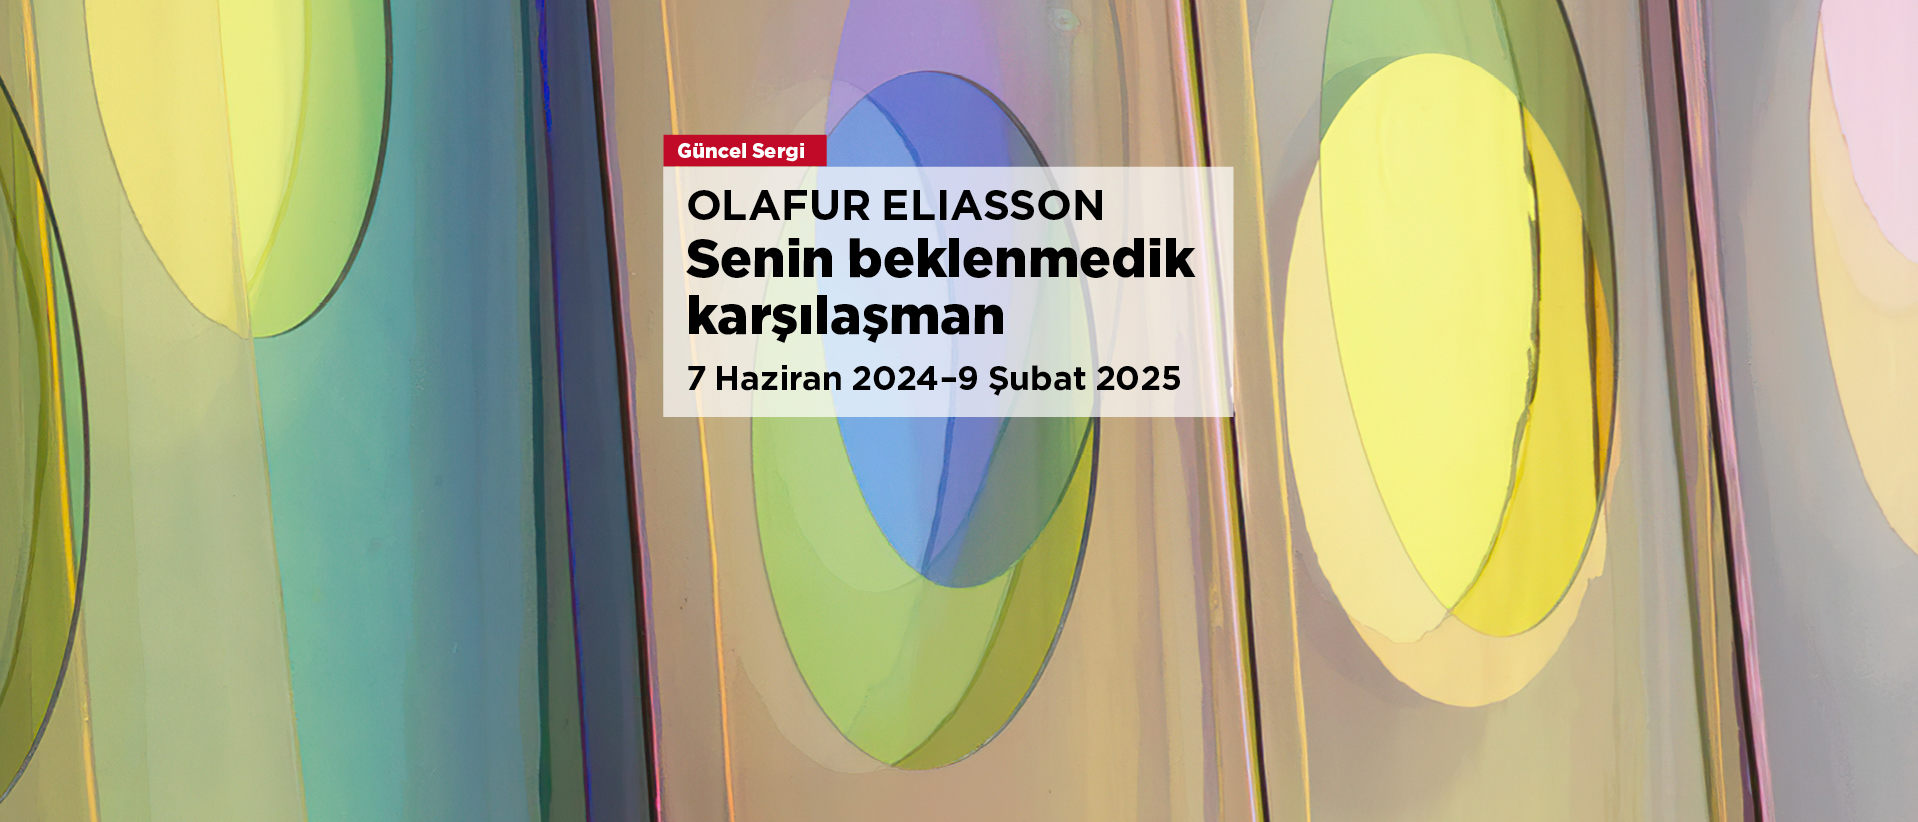 Olafur Eliasson: Senin beklenmedik karşılaşman